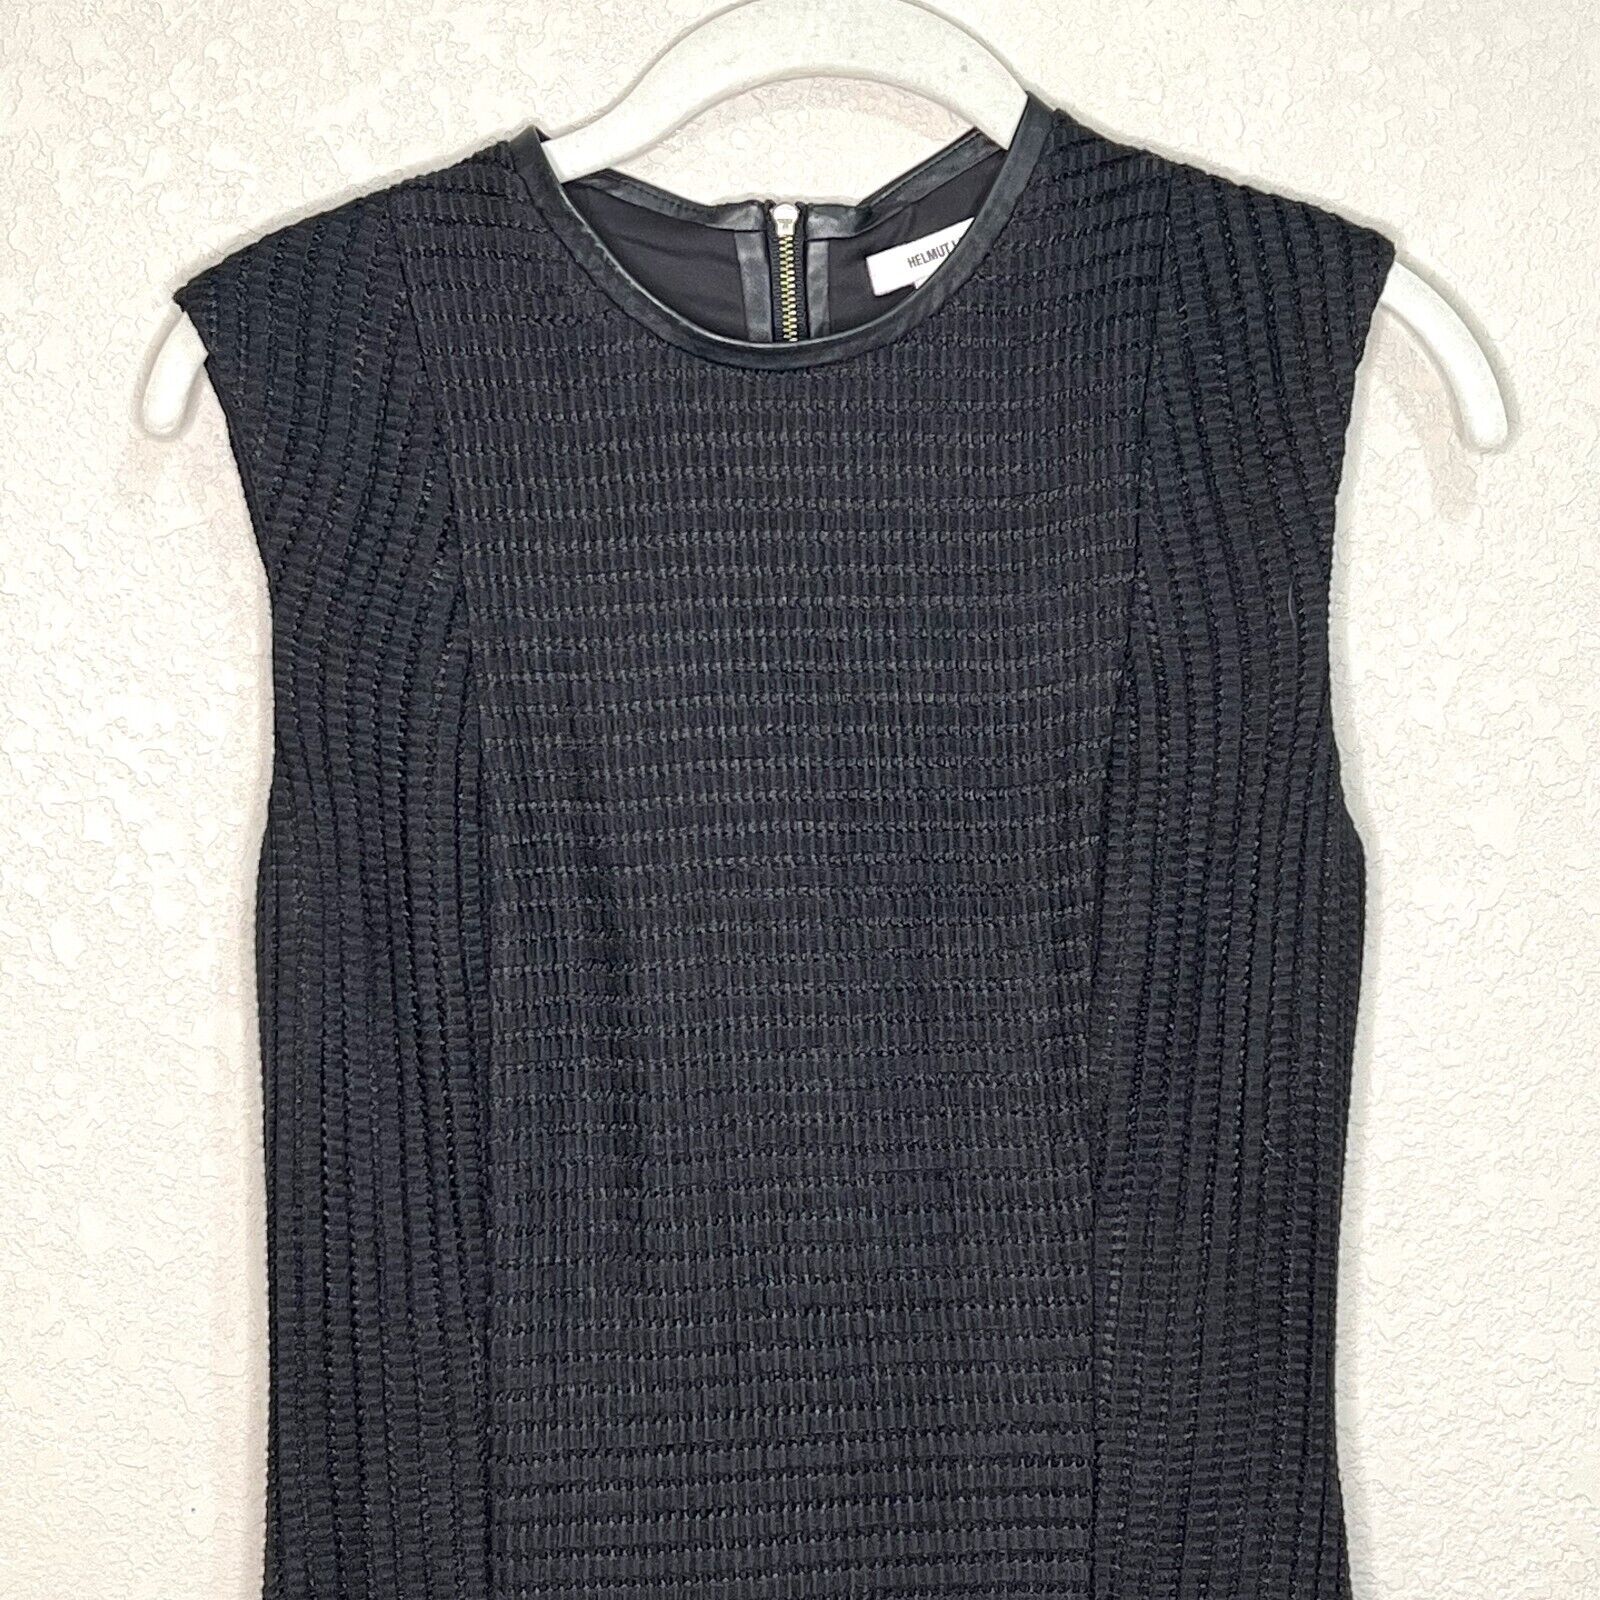 Helmut Lang Black Leather Trim Knit Sweater Pencil Dress Size 2